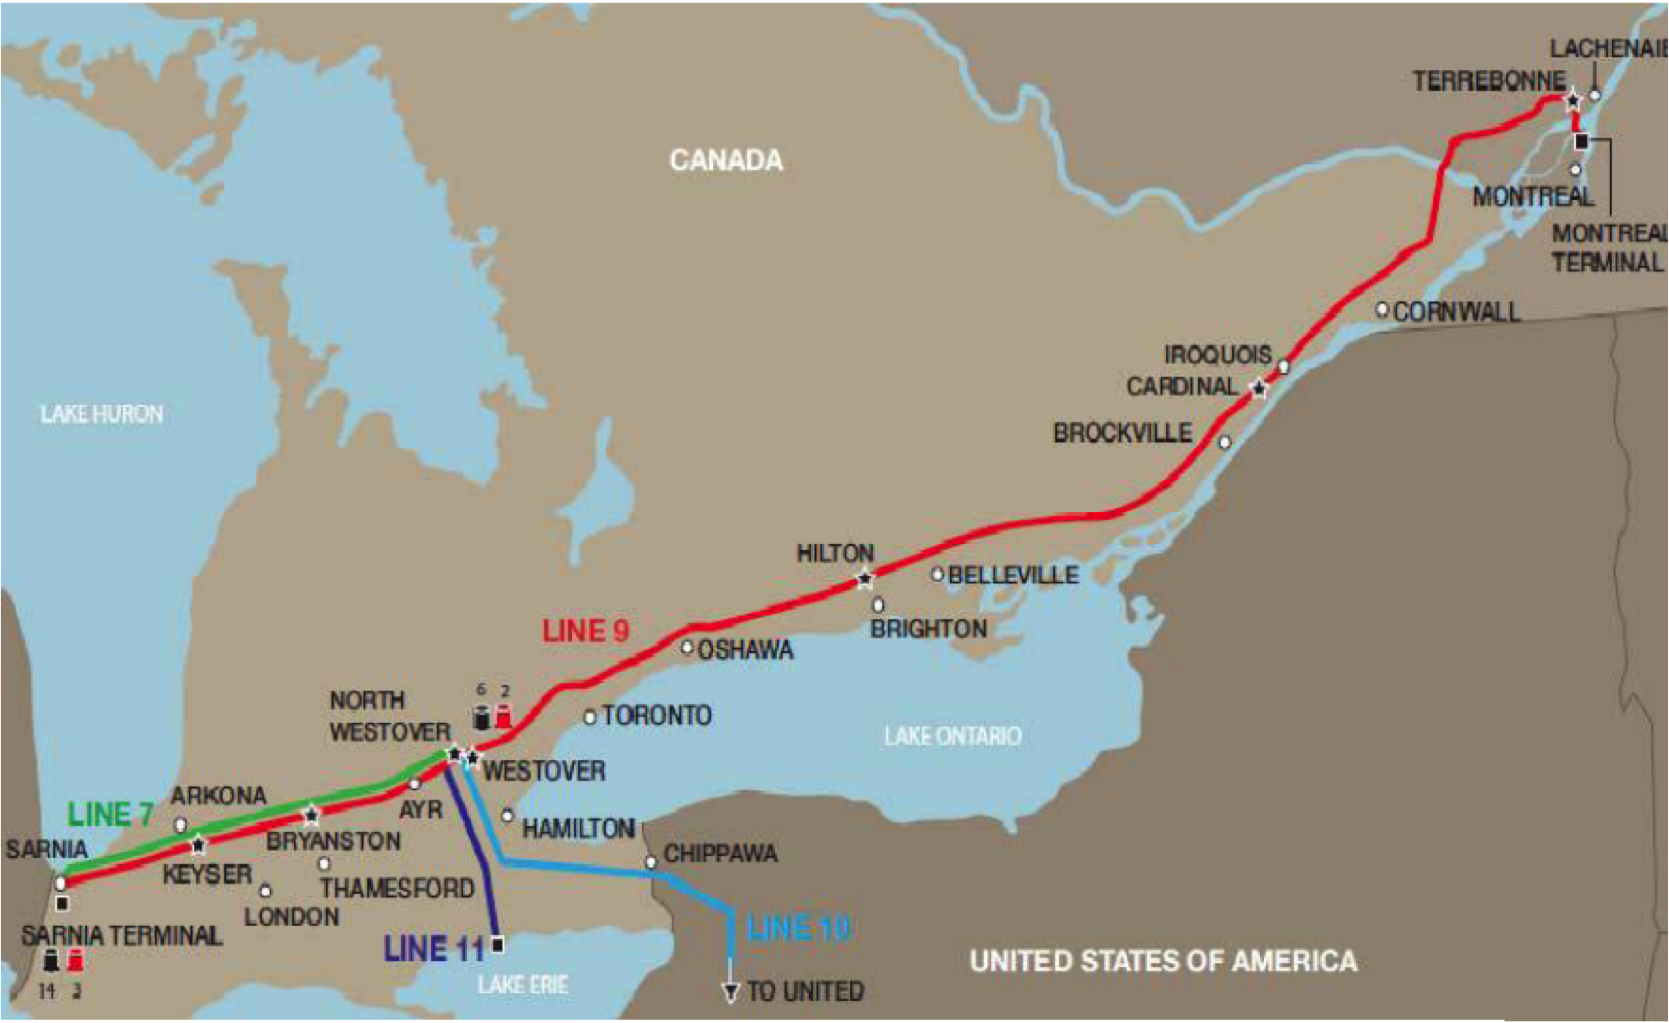 enbridge pipeline map